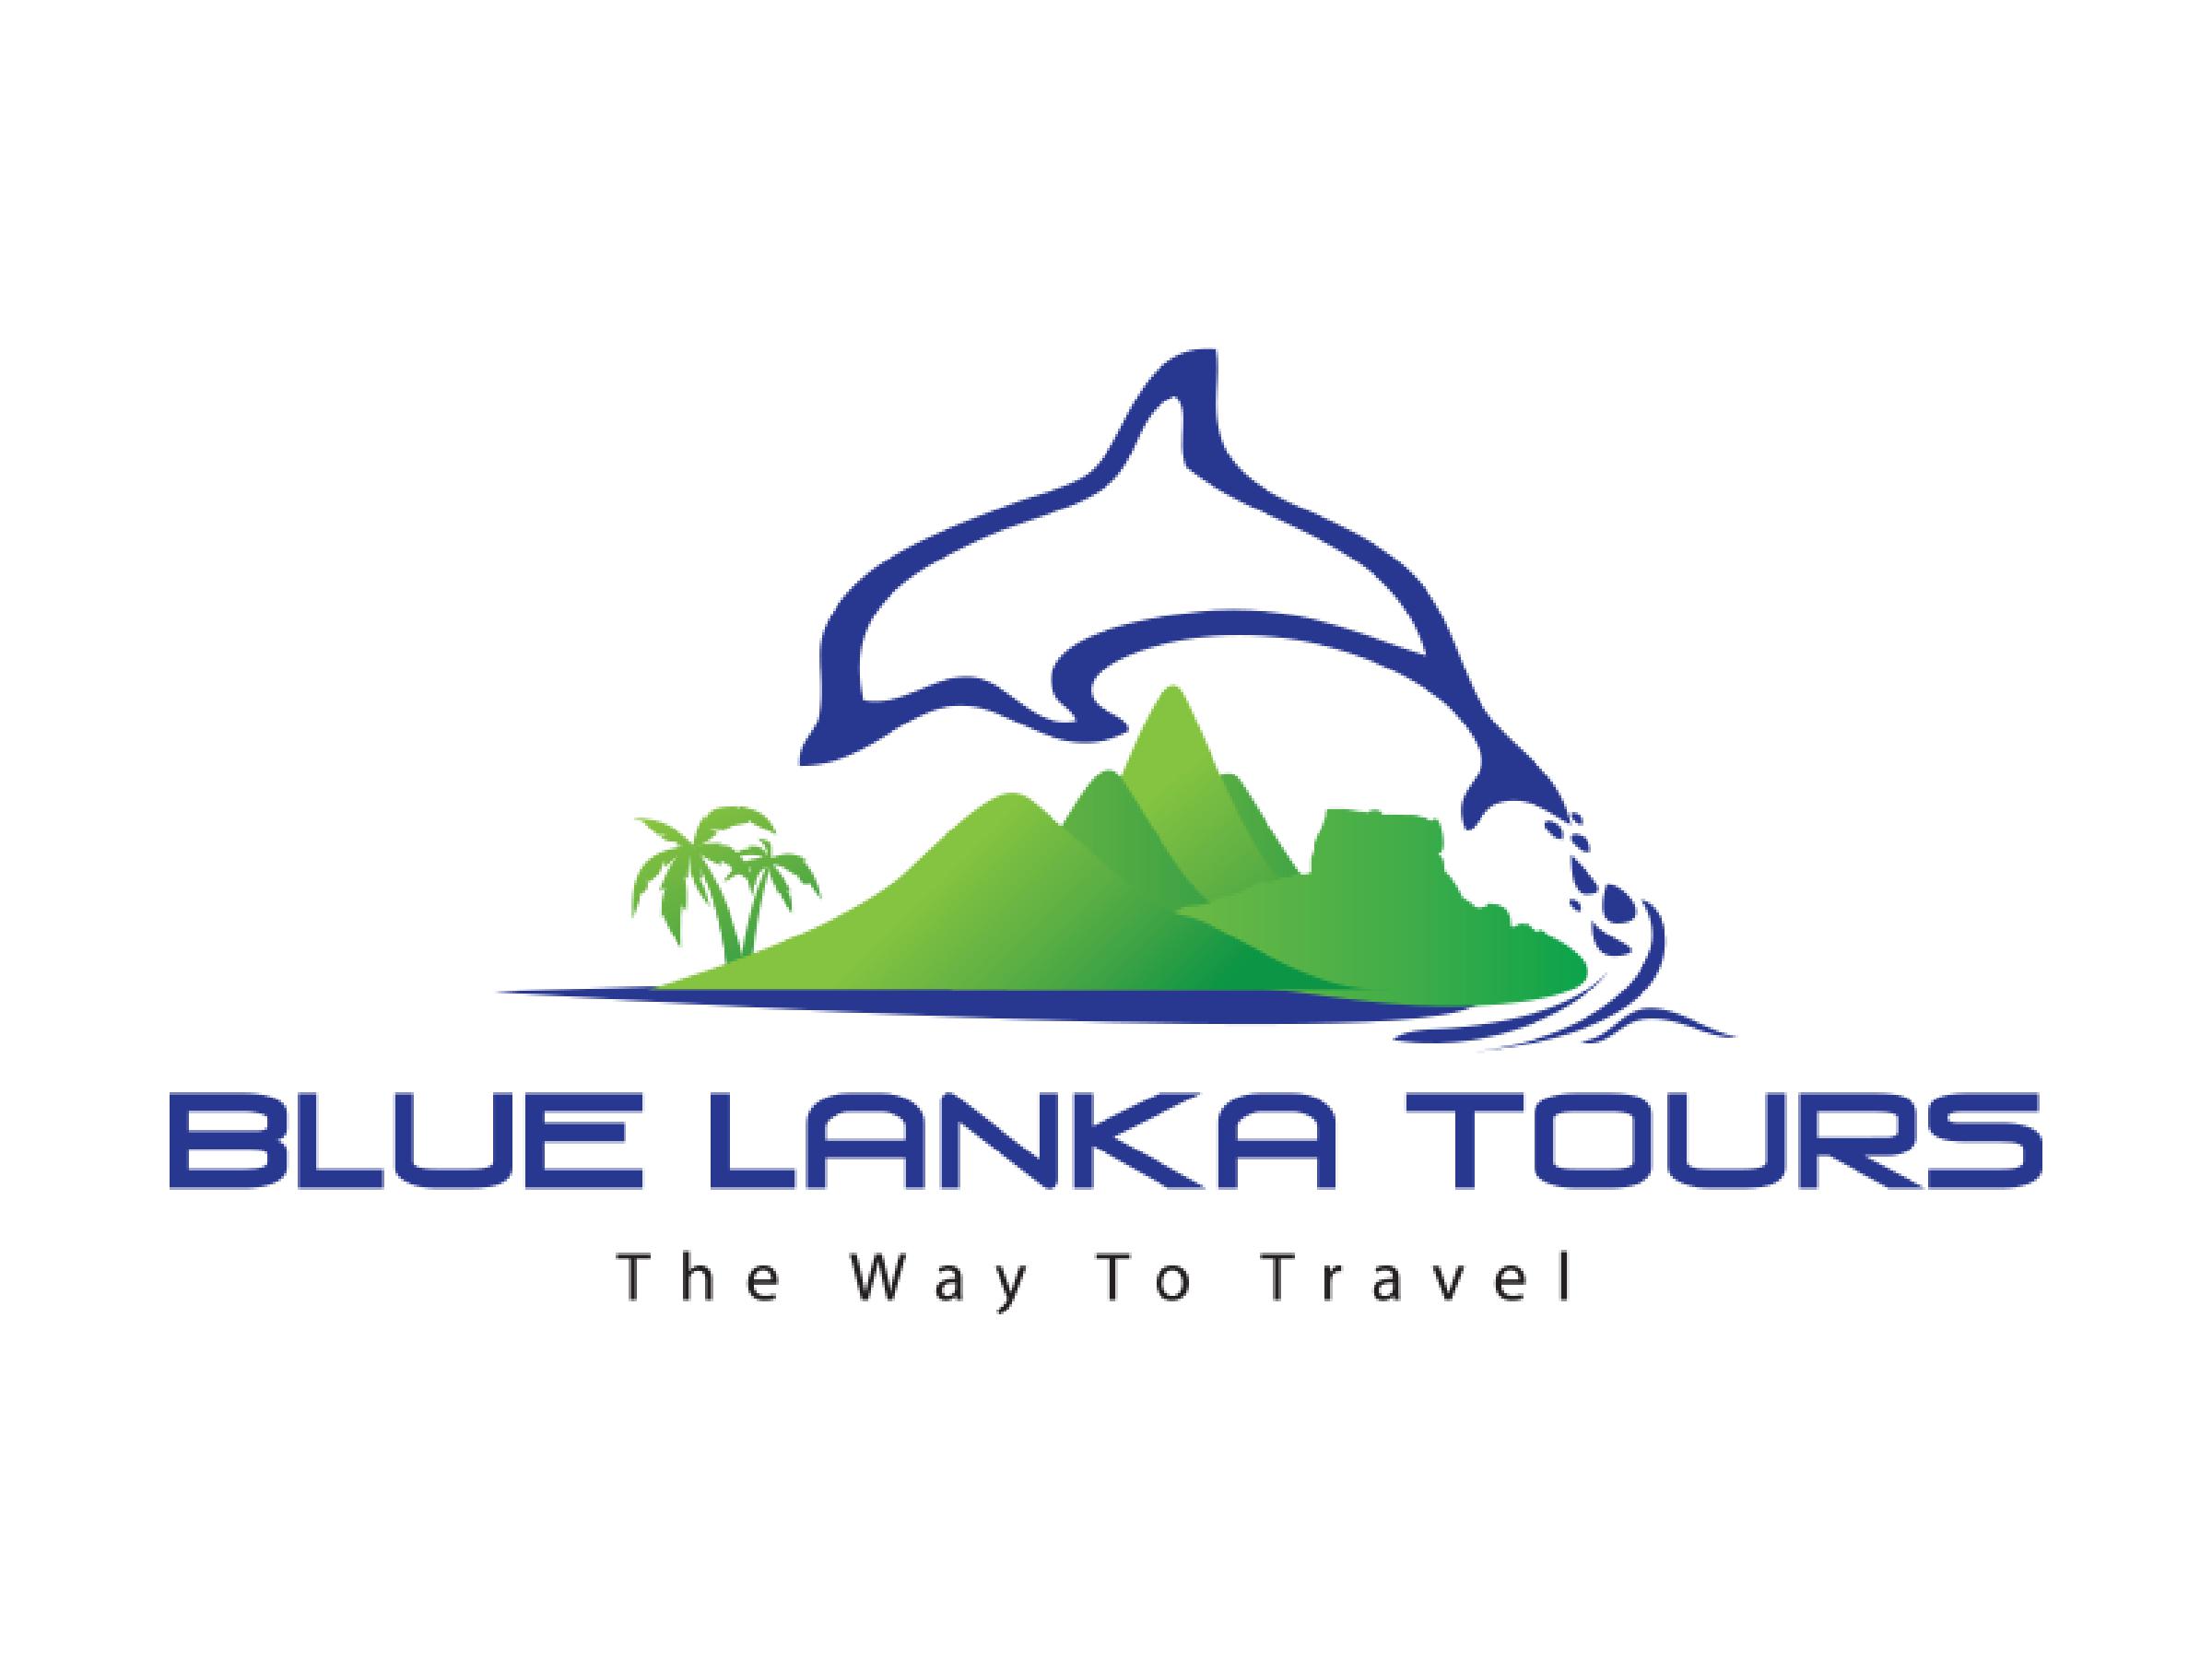 Blue Lanka Tours